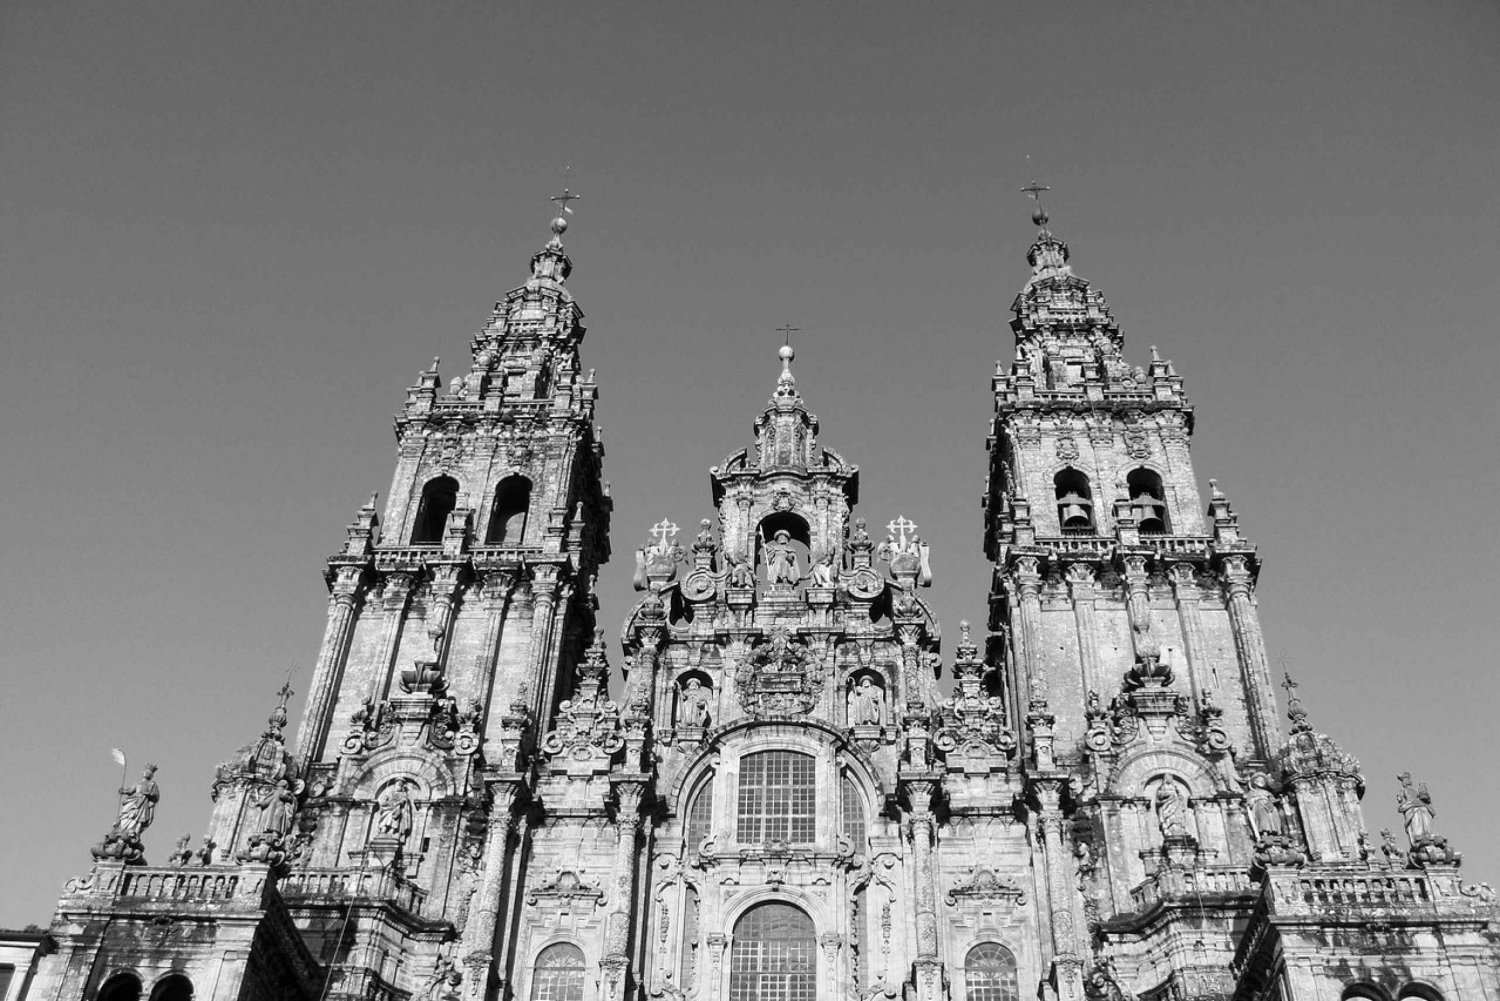 Private Tour Santiago de Compostela - Alle Highlights Tour